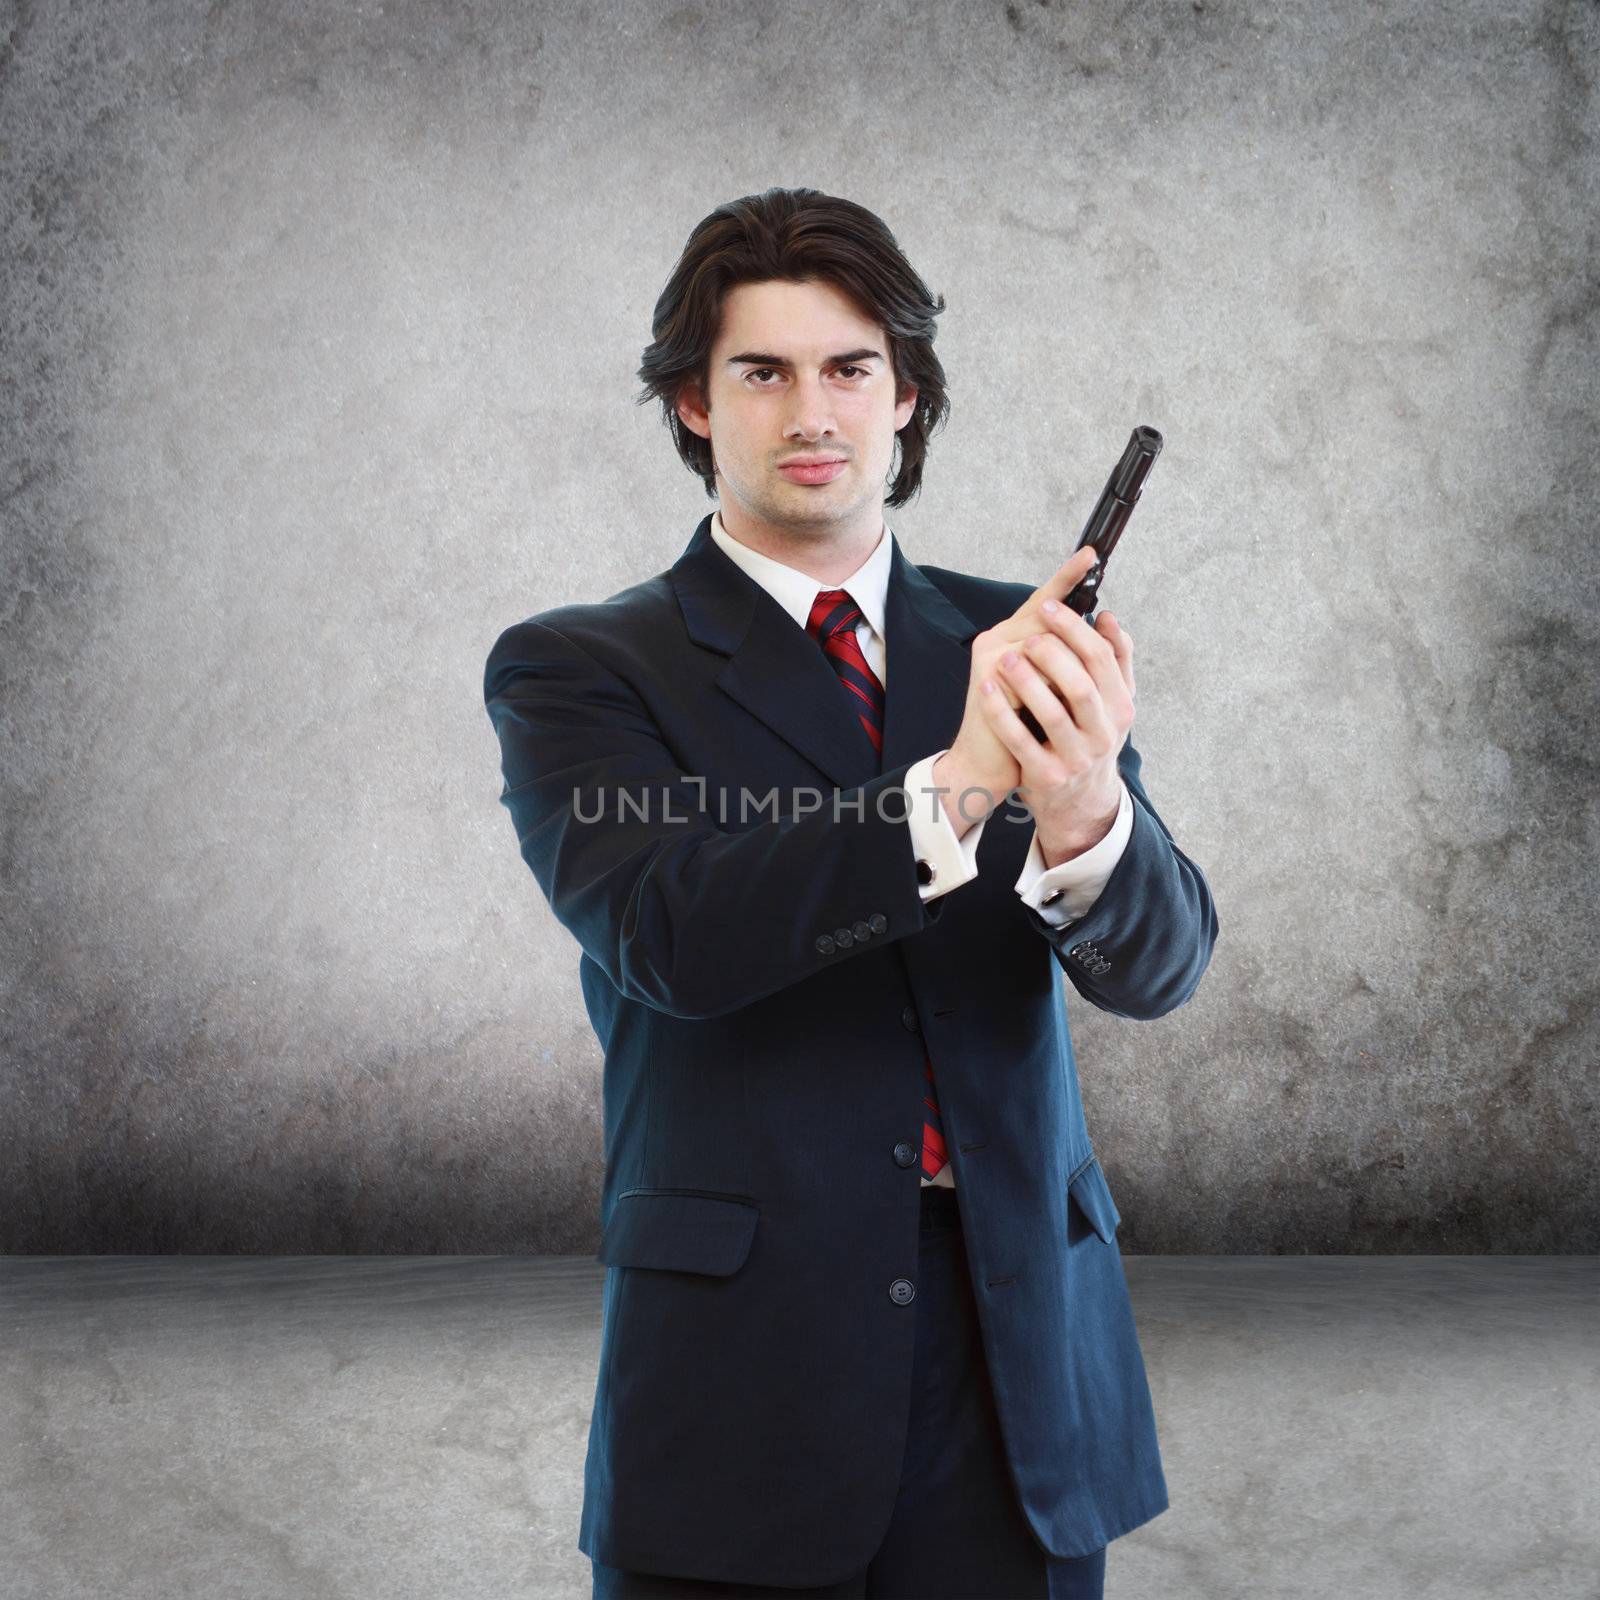 Handsome Man with a Hand Gun (agent, assassin, etc)